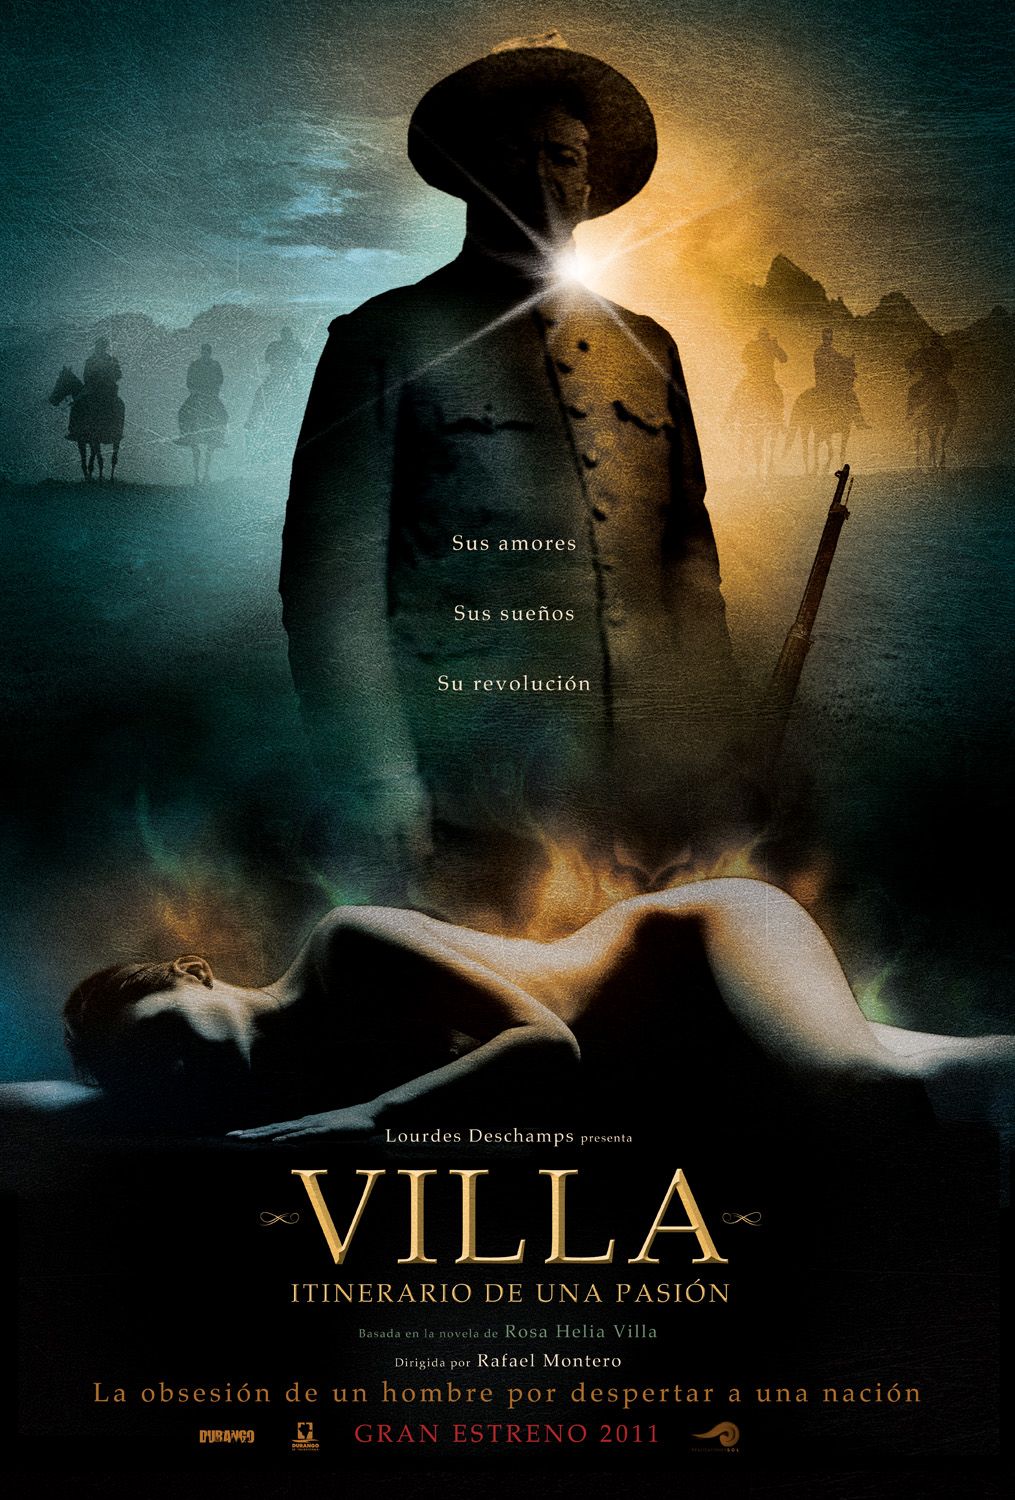 Extra Large Movie Poster Image for Villa: Itineraro de una pasion 